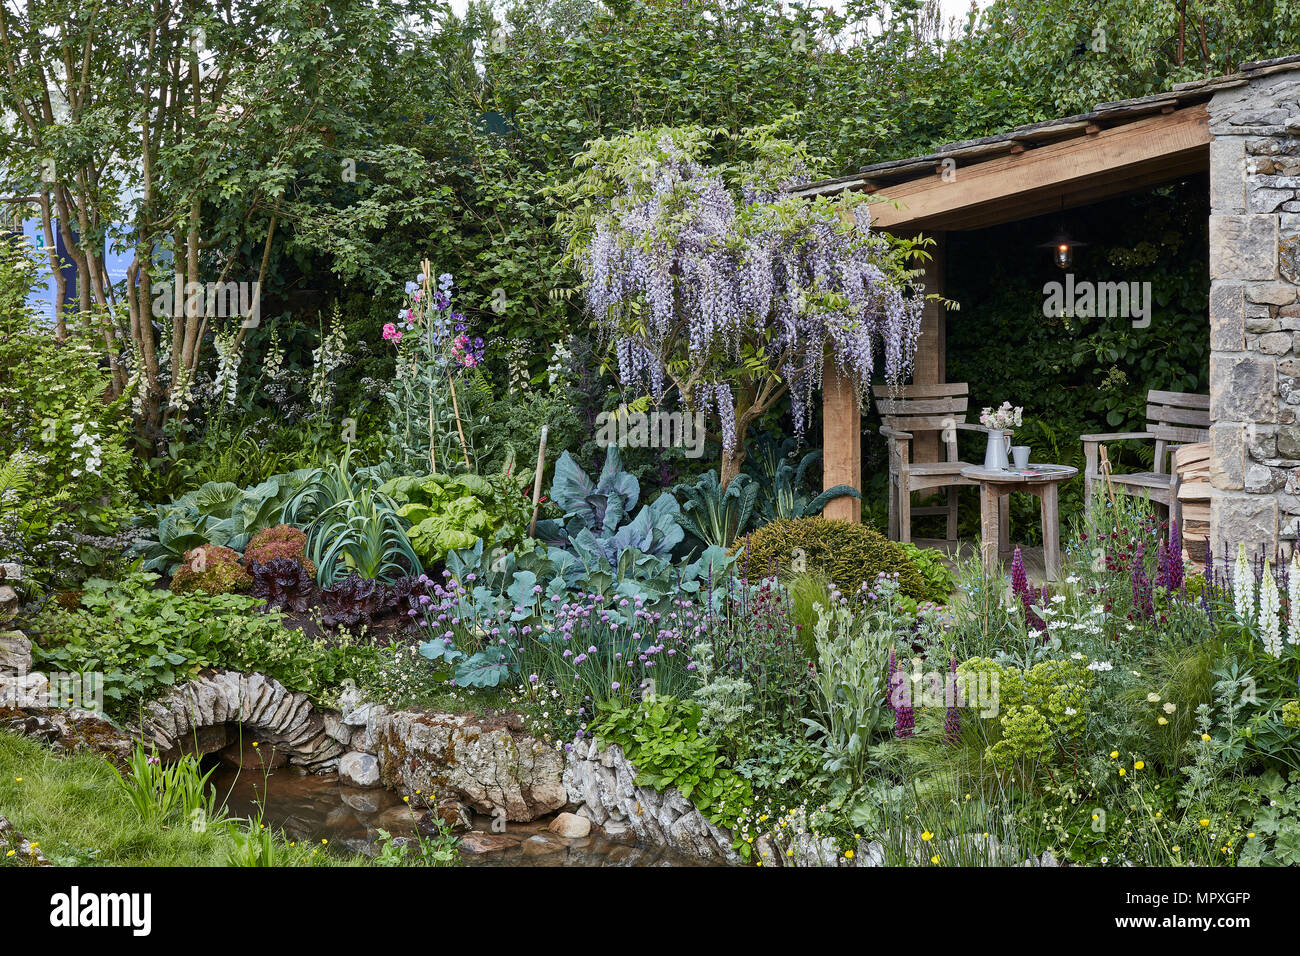 chelsea flower show yorkshire garden stock photo: 186209850 - alamy